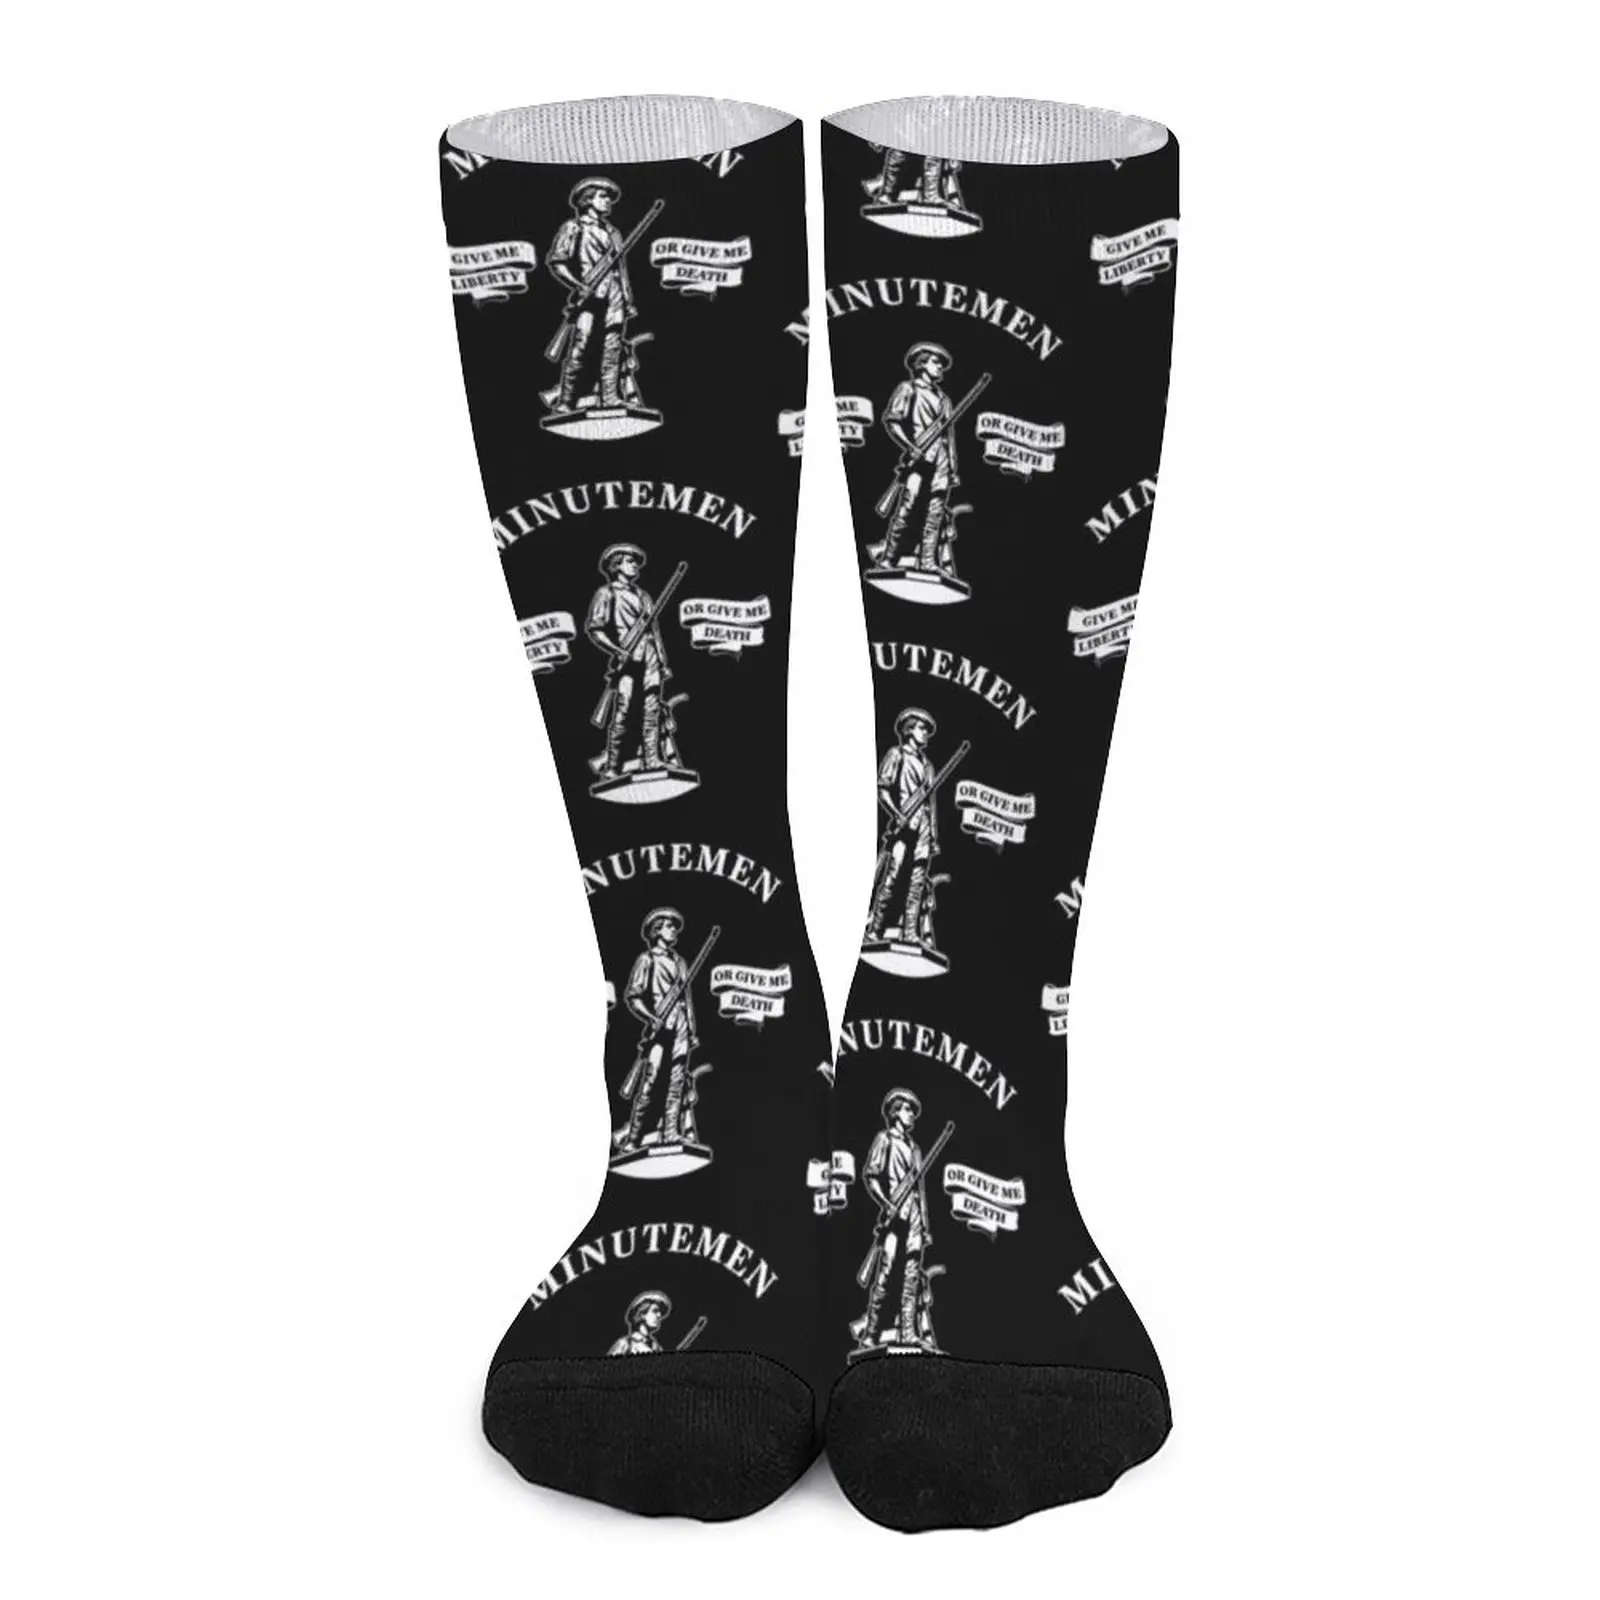 Minutemen 4th of July 1776 USA America Socks Fun socks socks designer brand Stockings man valentine gift ideas paramour valentine s be my valentine 40